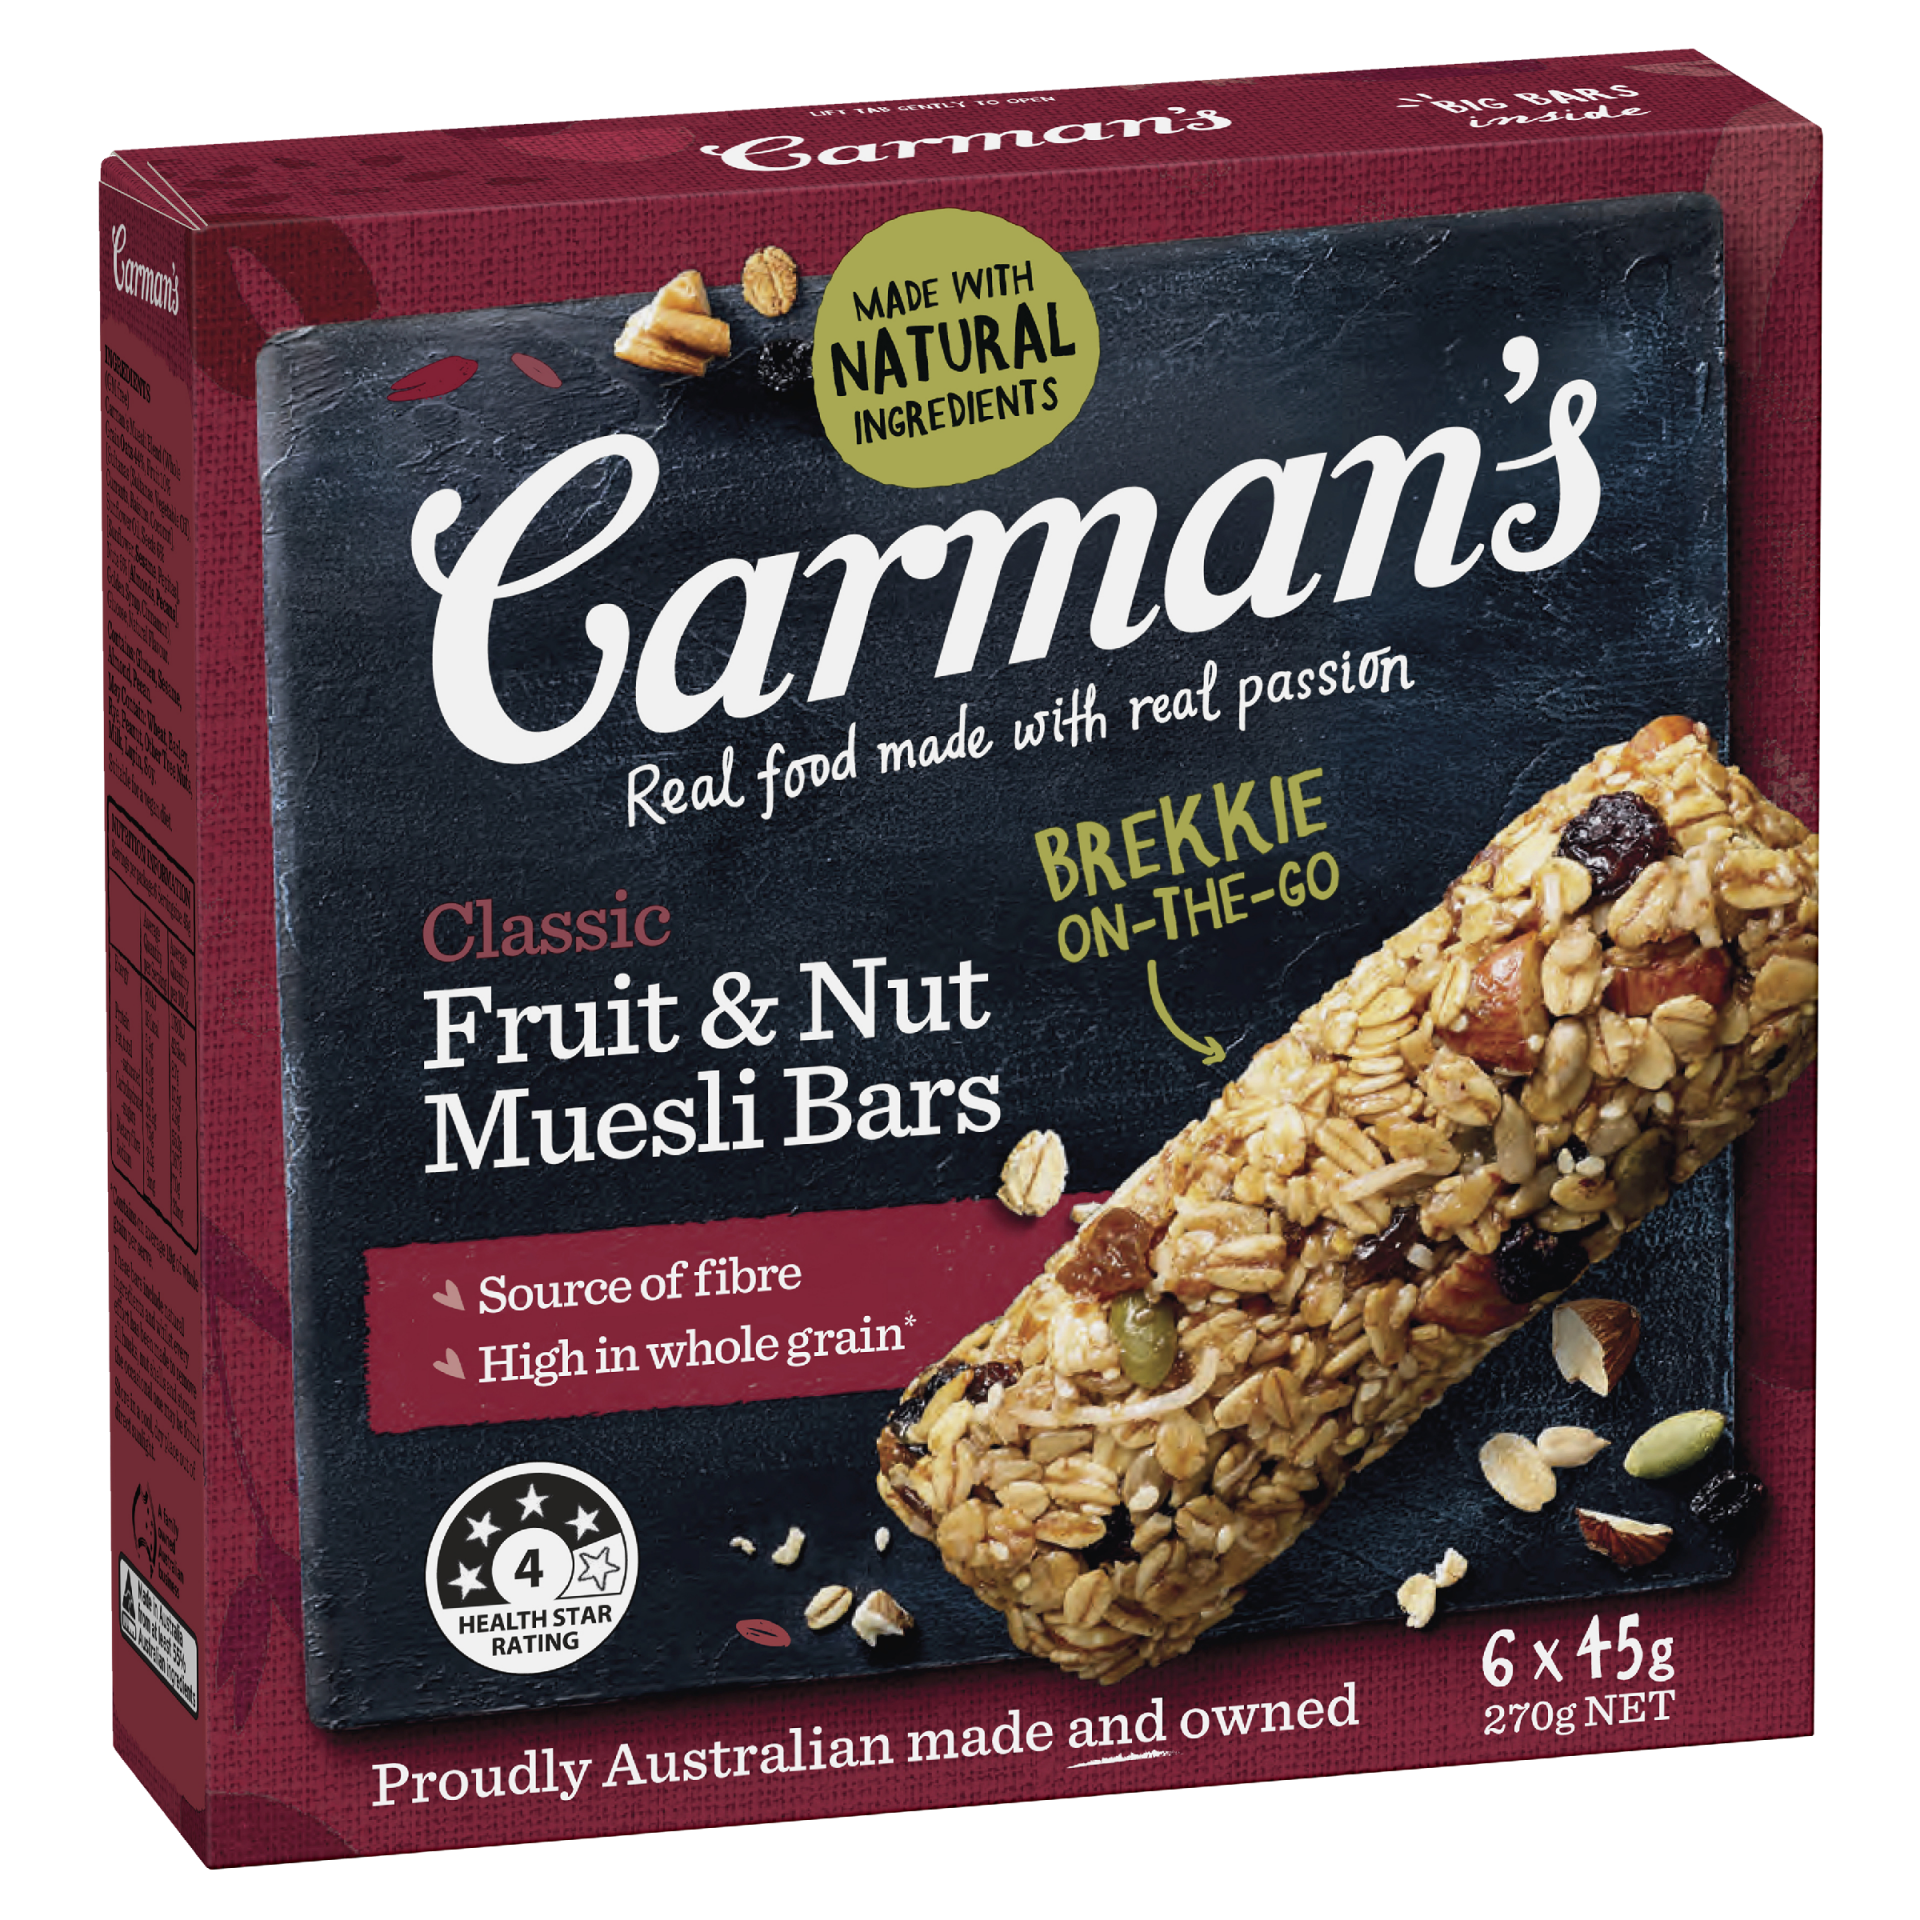 Carman's Muesli Bar - Classic Fruit & Nut Muesli Bar 40g